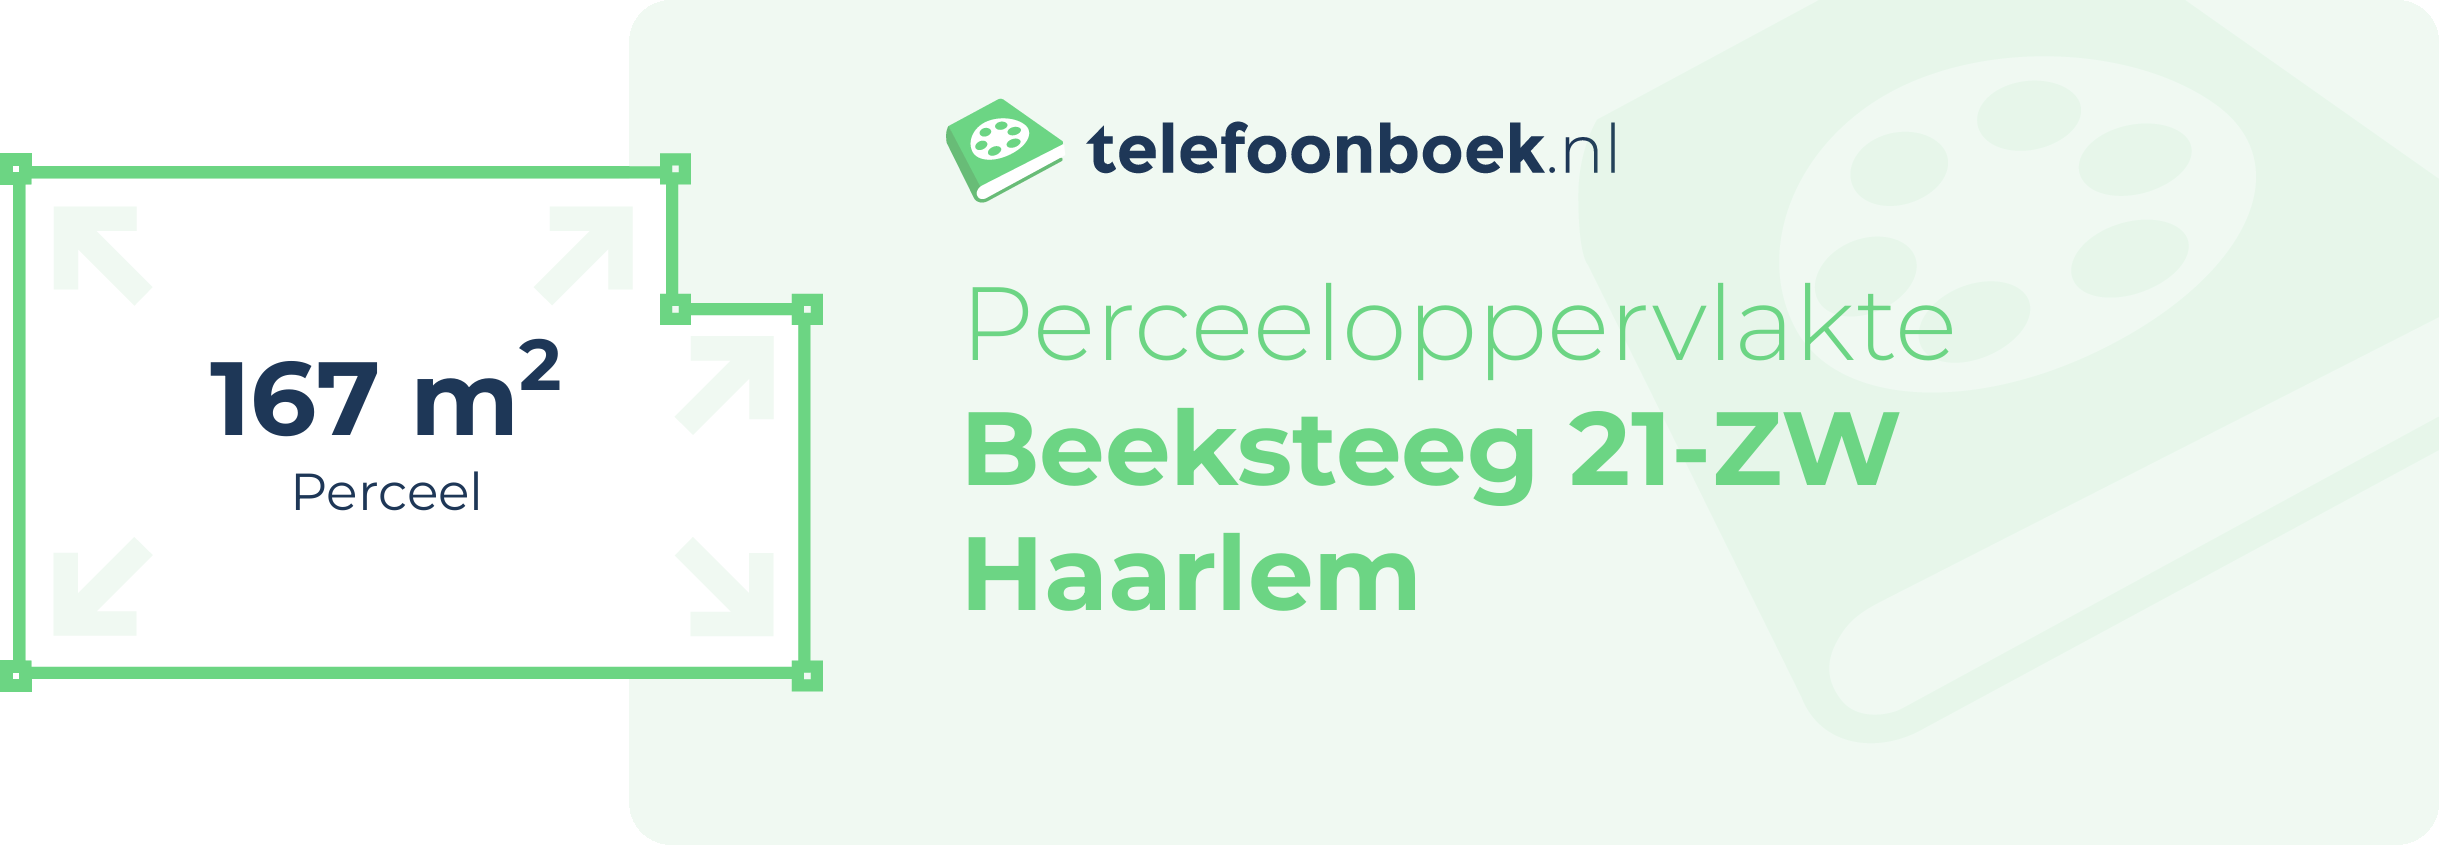 Perceeloppervlakte Beeksteeg 21-ZW Haarlem